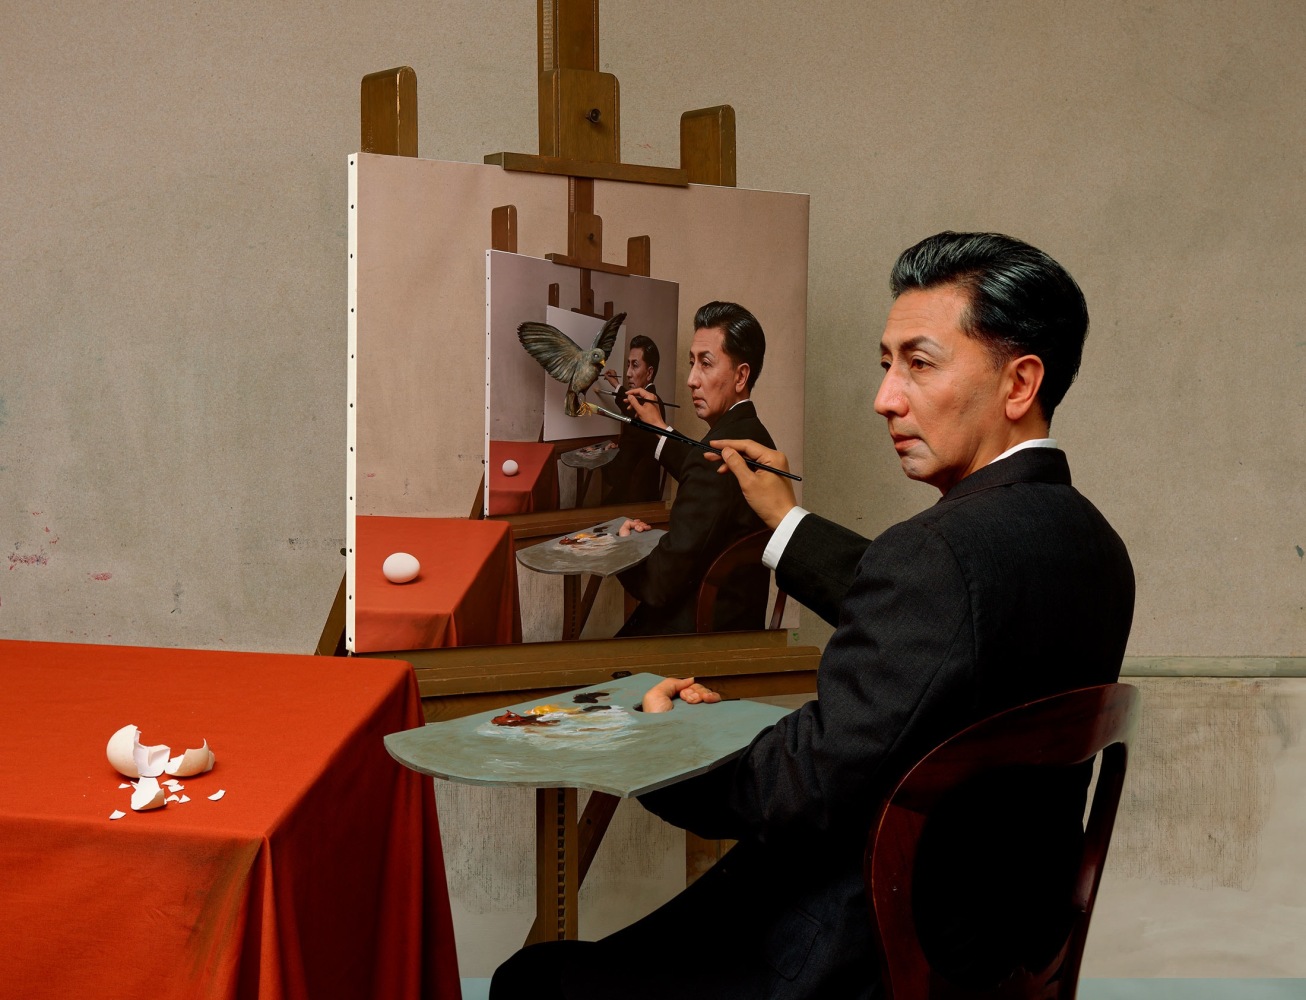 Yasumasa Morimura, Self-Portraits through Art History (Magritte / Triple Personality), 2016